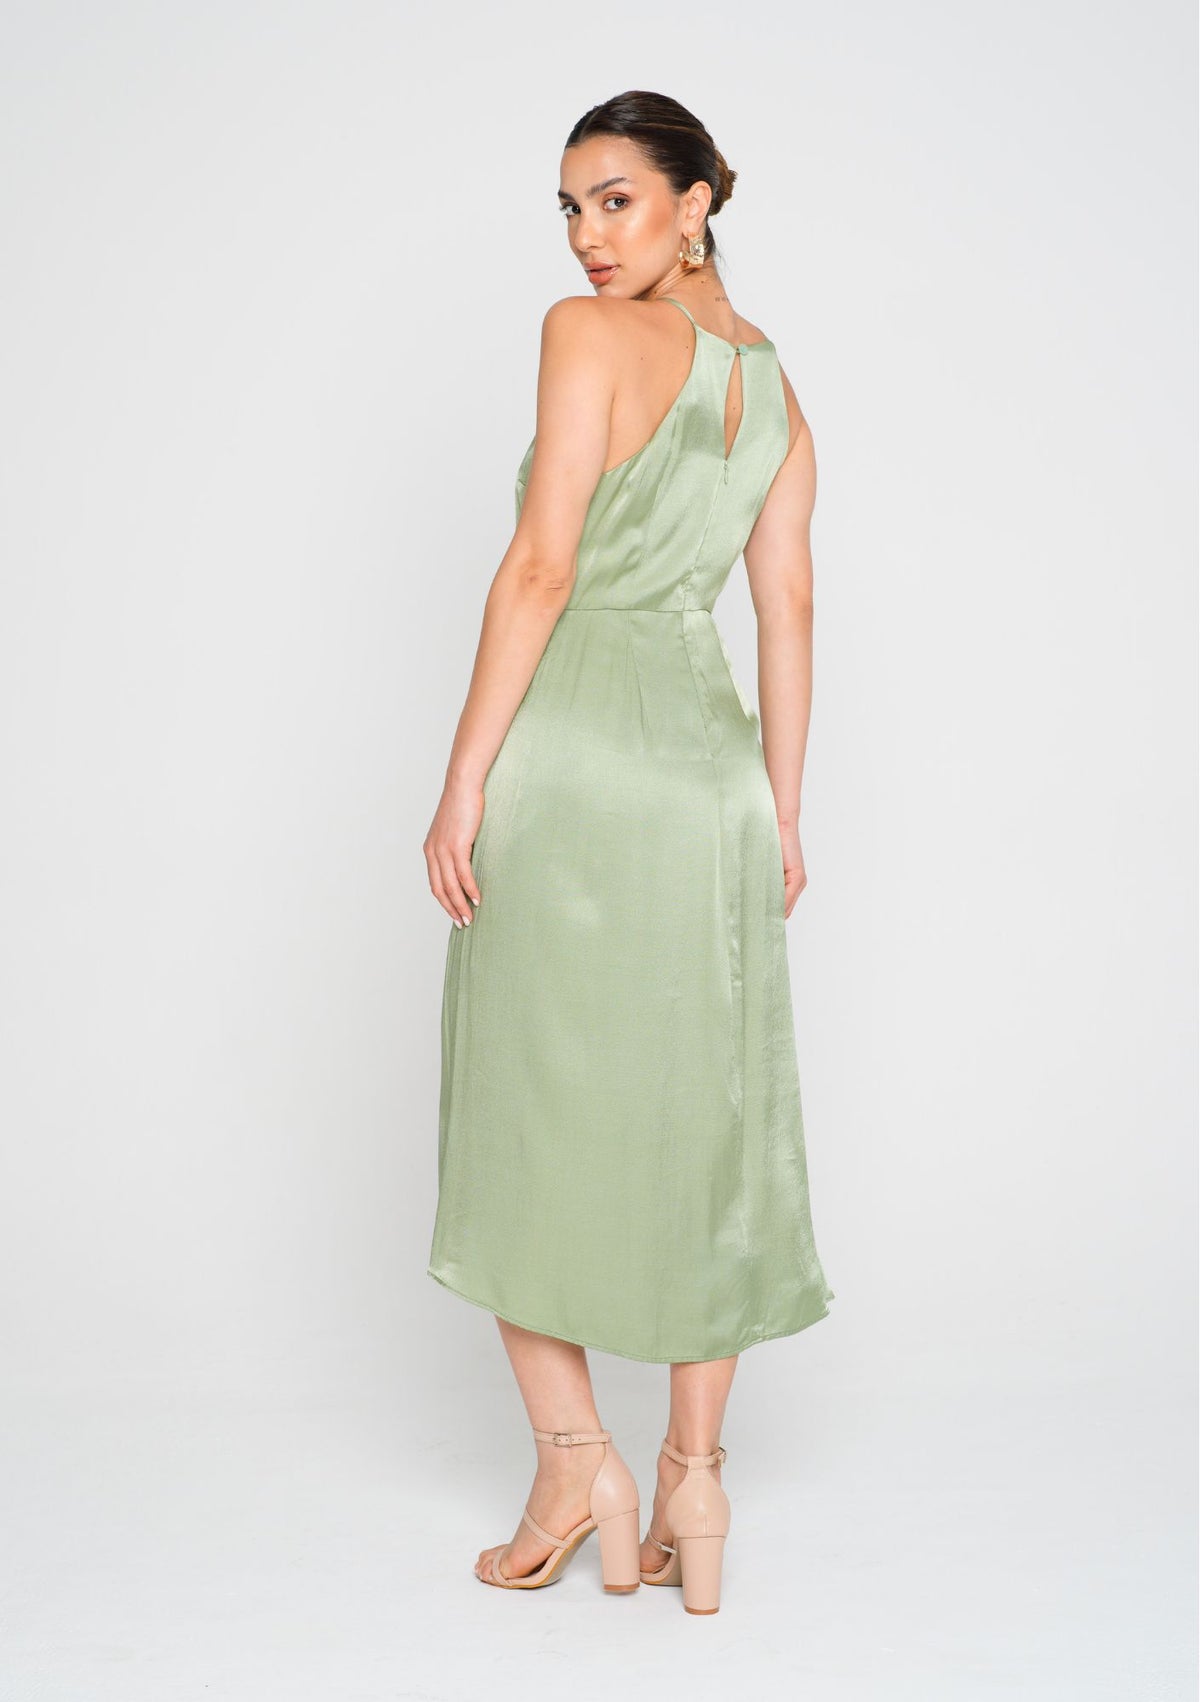 Brunch Dress - Photographed in Olive Green Satin